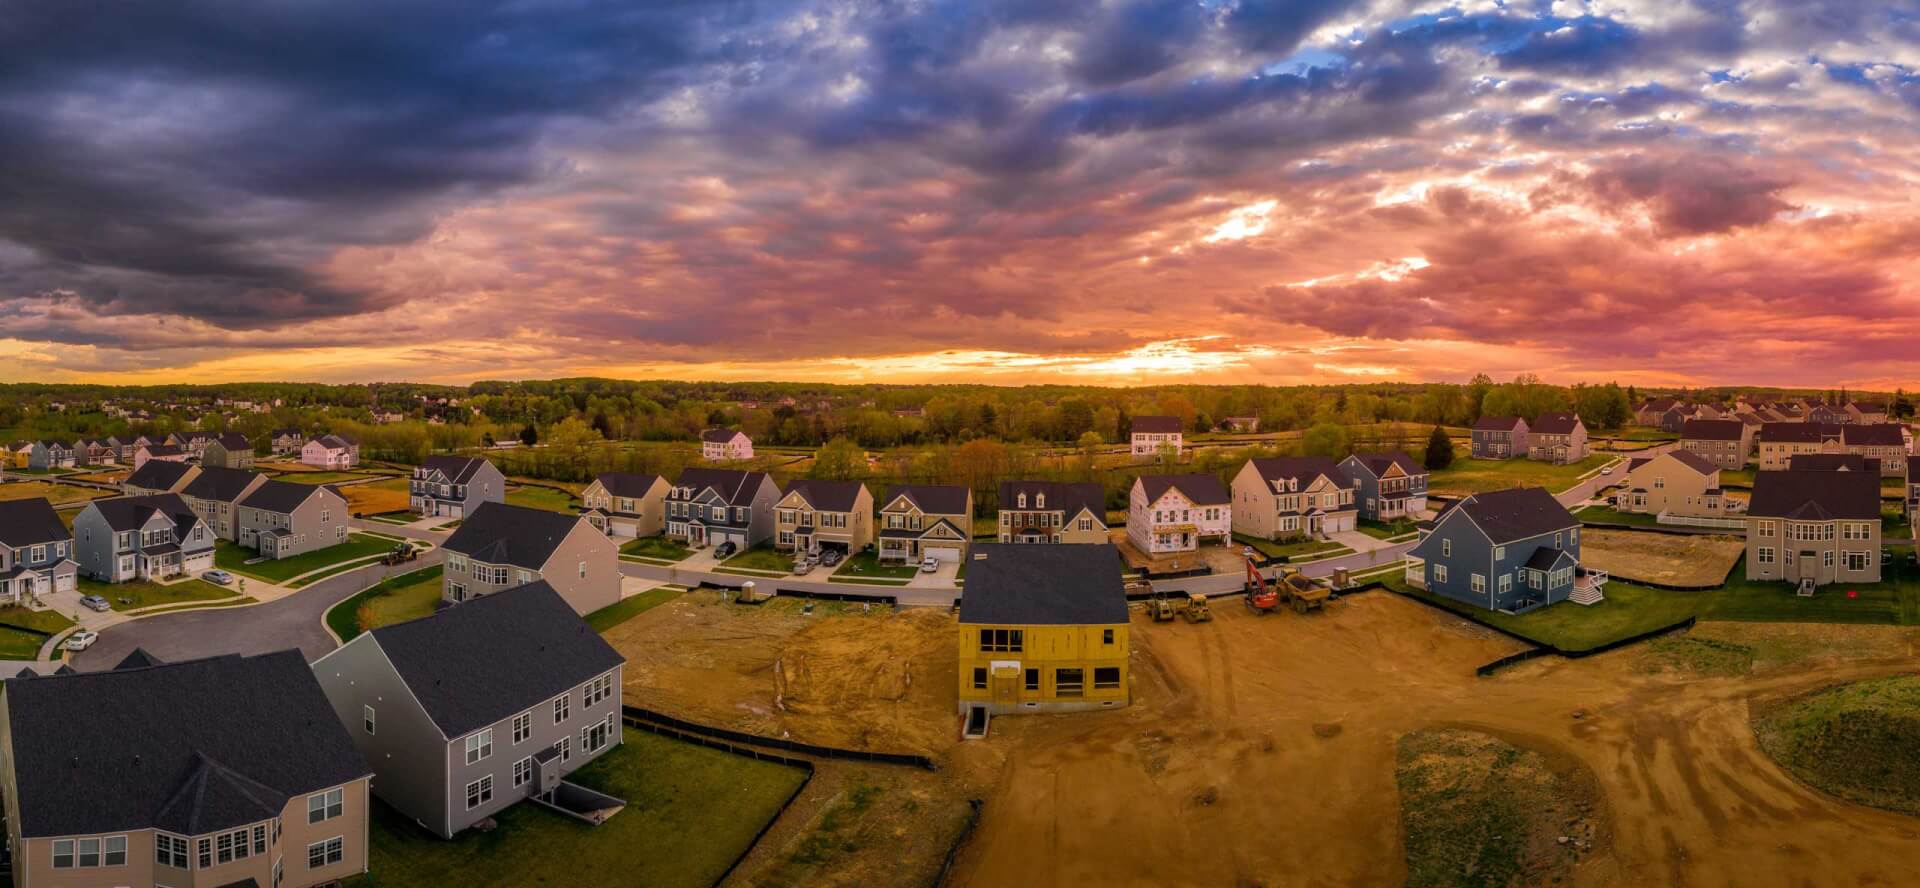 Artsy sunset over rural suburban neighborhood